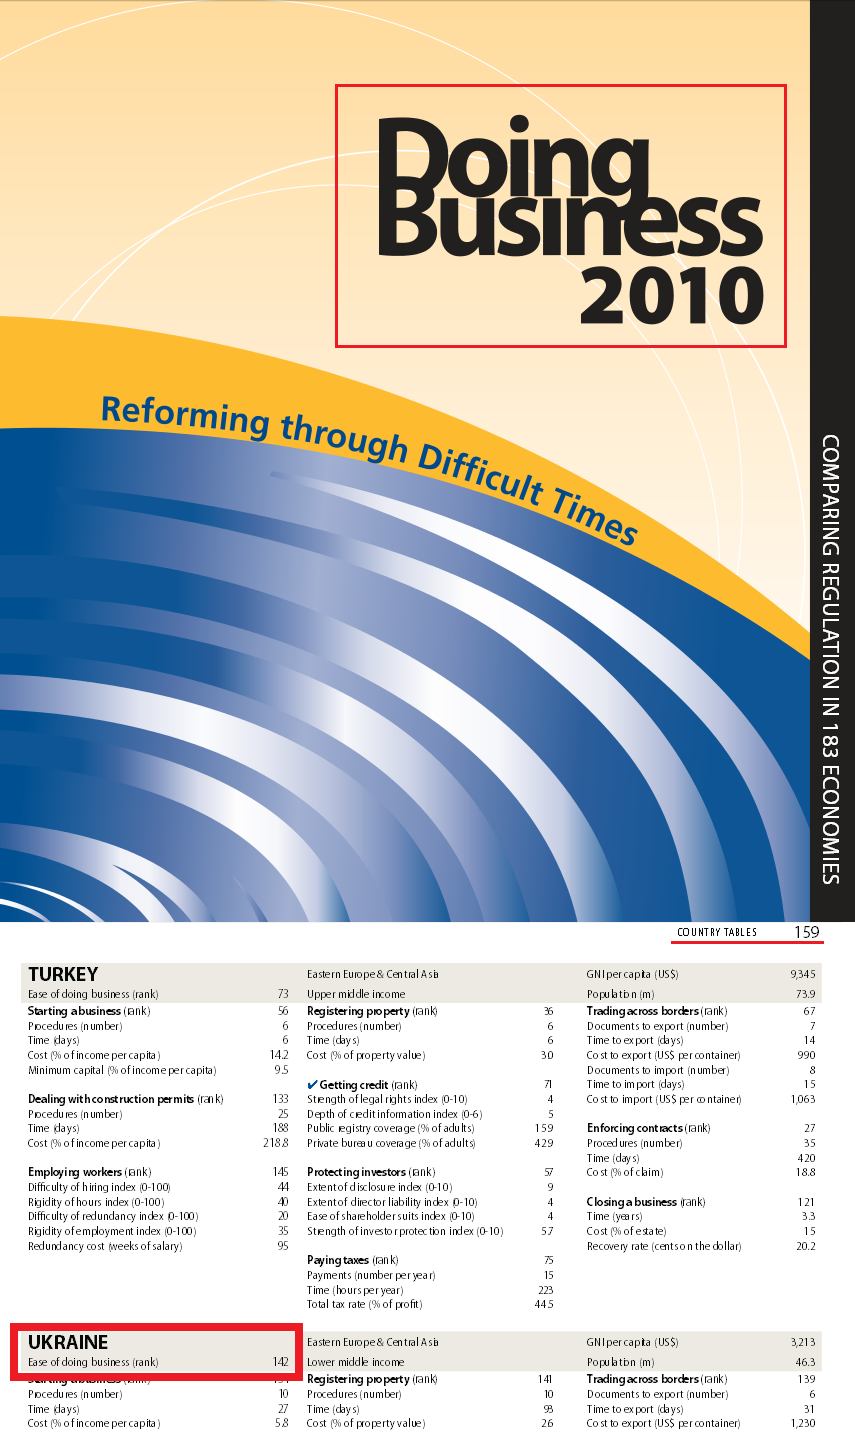 http://www.doingbusiness.org/~/media/FPDKM/Doing%20Business/Documents/Annual-Reports/English/DB10-FullReport.pdf